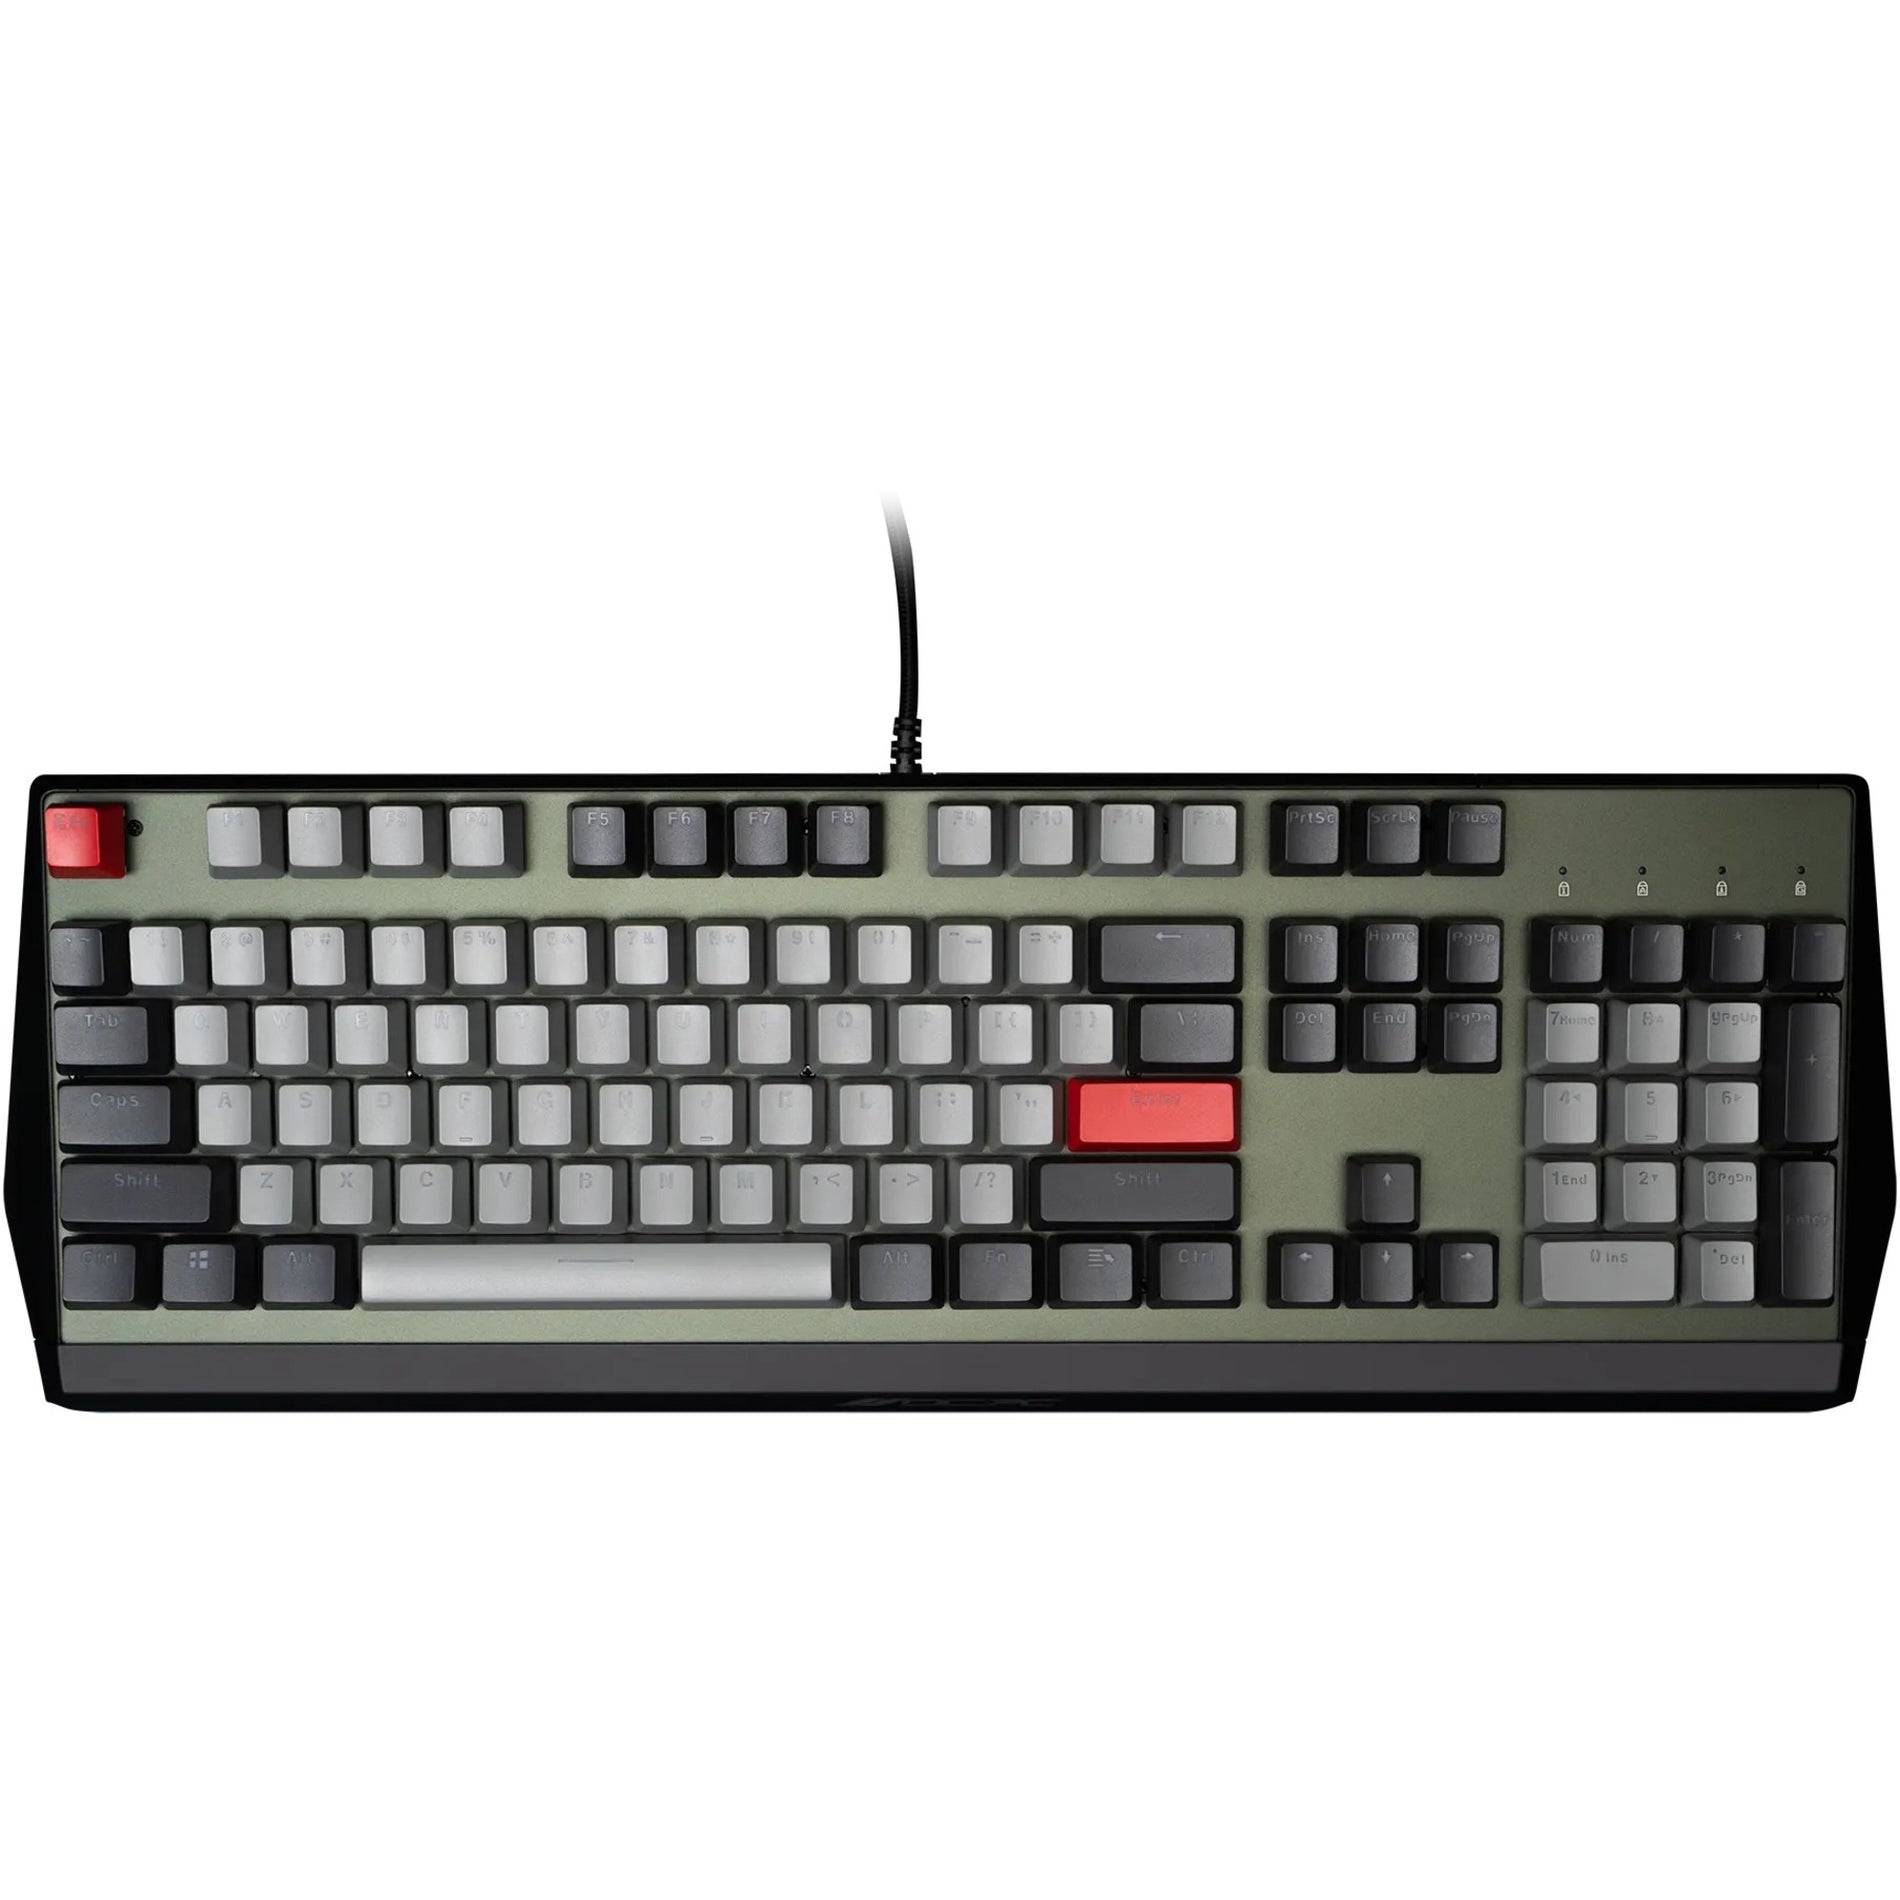 VisionTek 901540 OCPC Gaming - KR1 Premium Mechanical Keyboard RGB Backlight Anti-ghosting Ergonomic Design